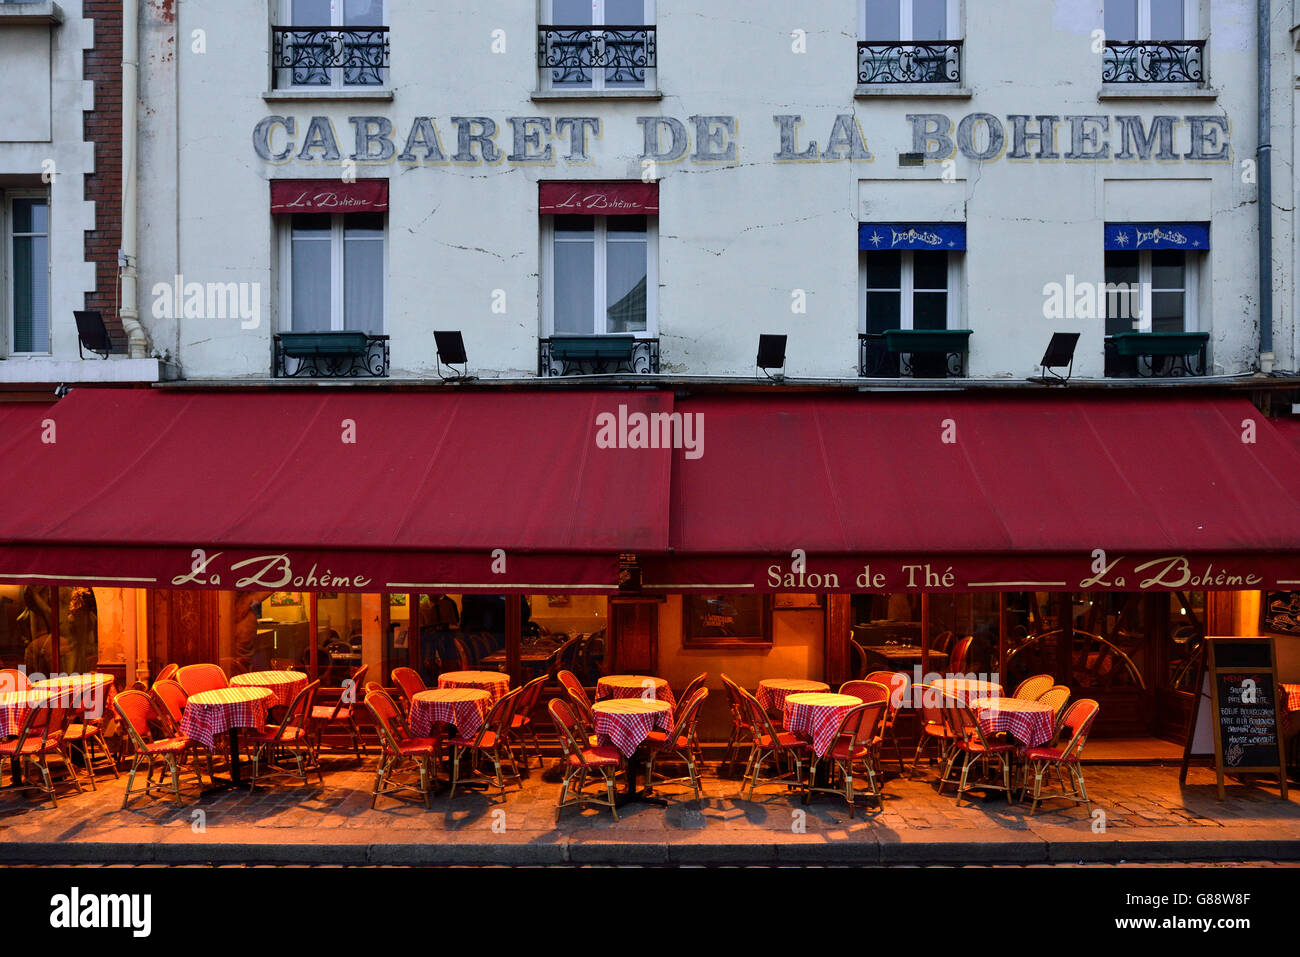 Cafe boheme paris hi-res stock photography and images - Alamy